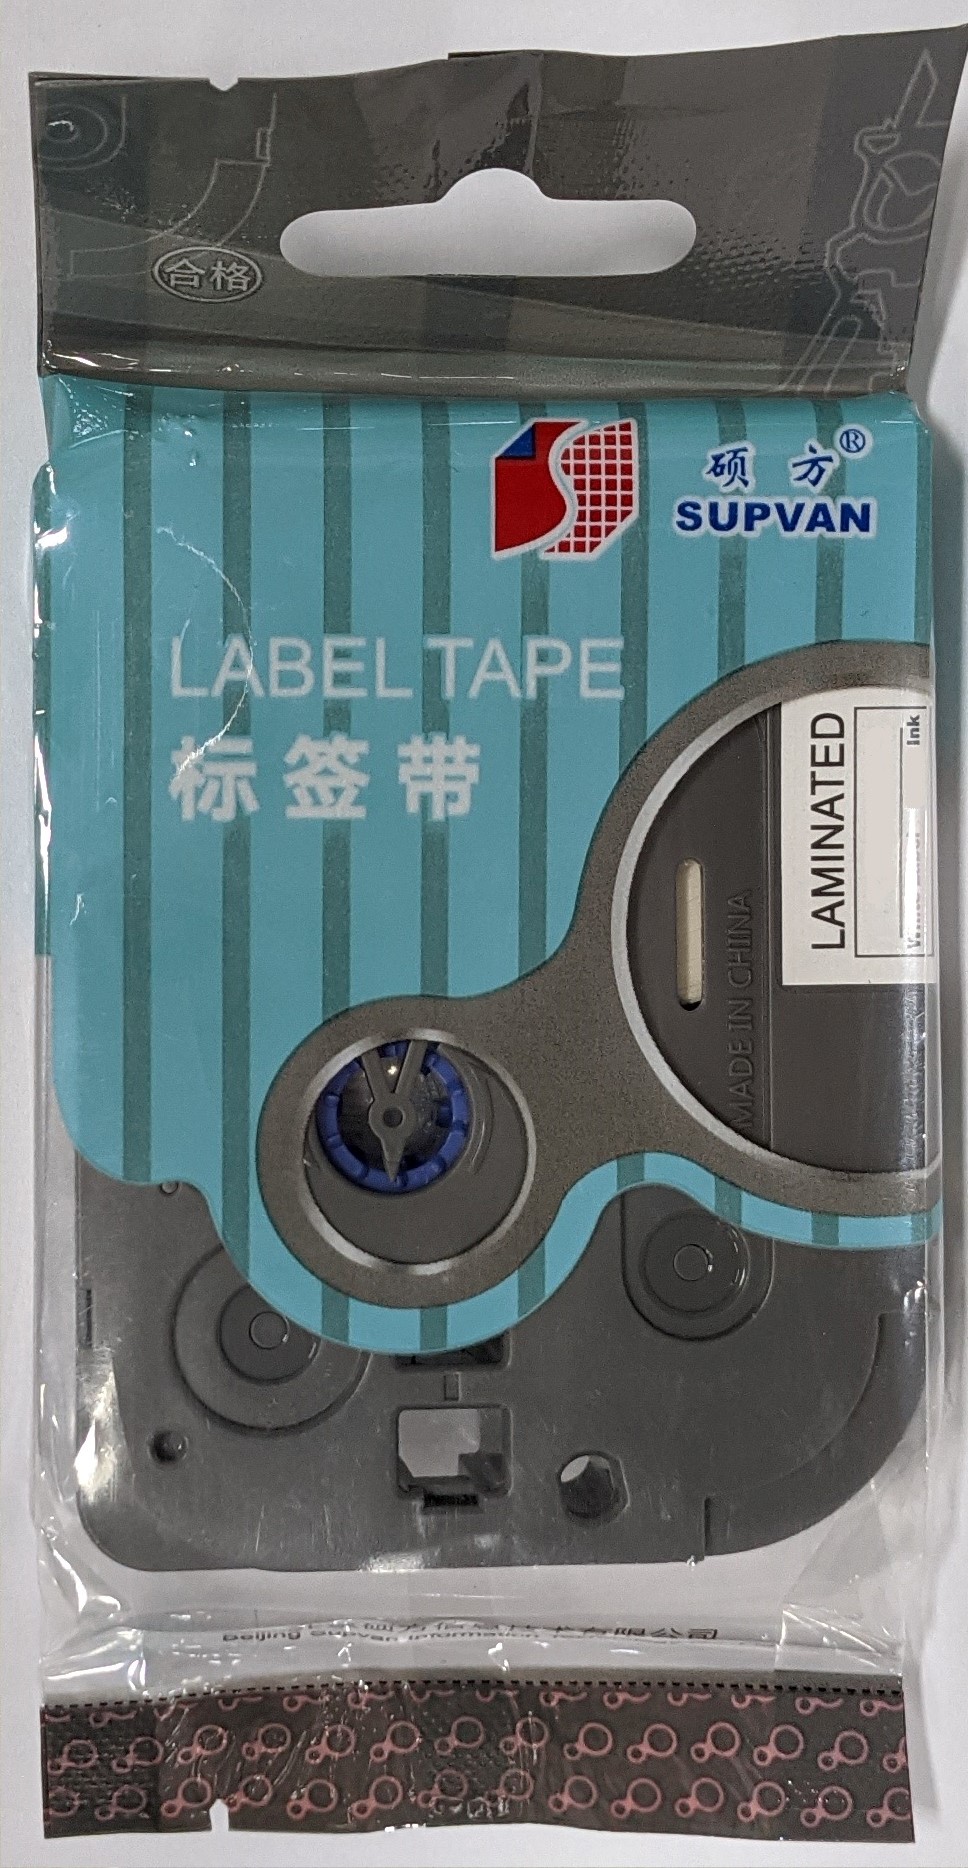 Samolepicí páska Supvan L-315E, 6mm x 8m, biela tlač / čierný podklad, laminovaná